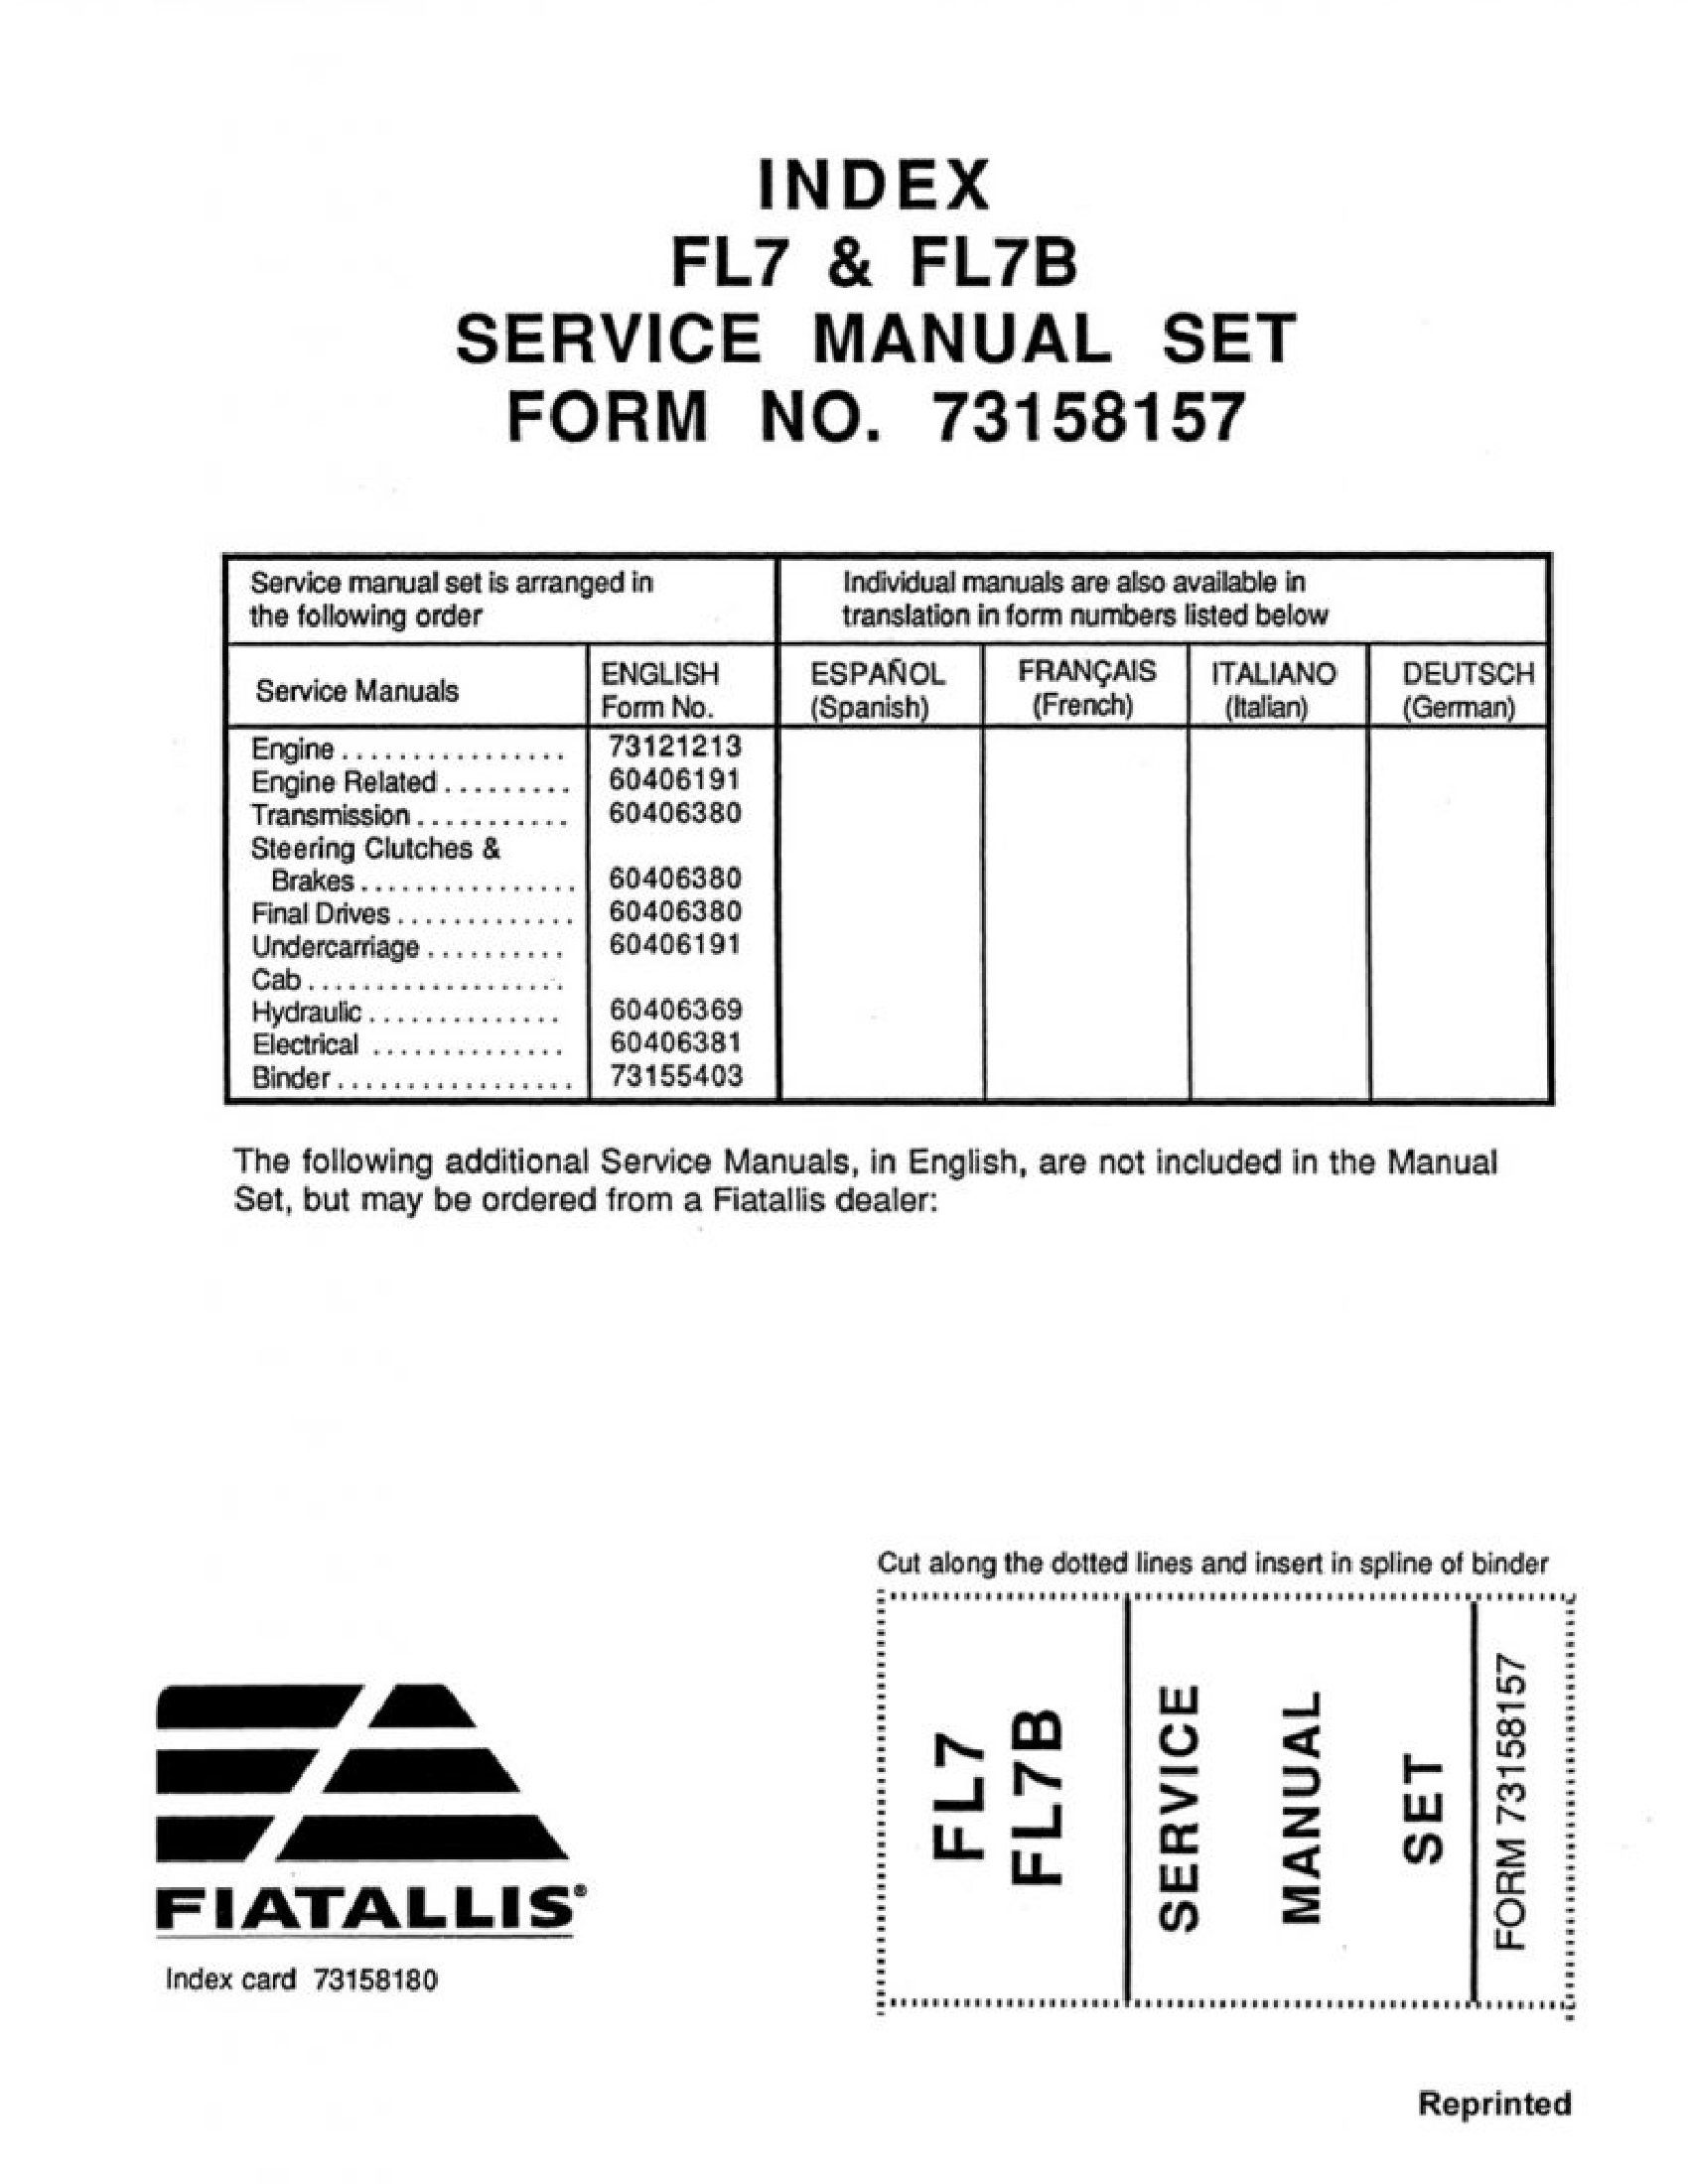 Fiat-Allis FL7 Dozer manual